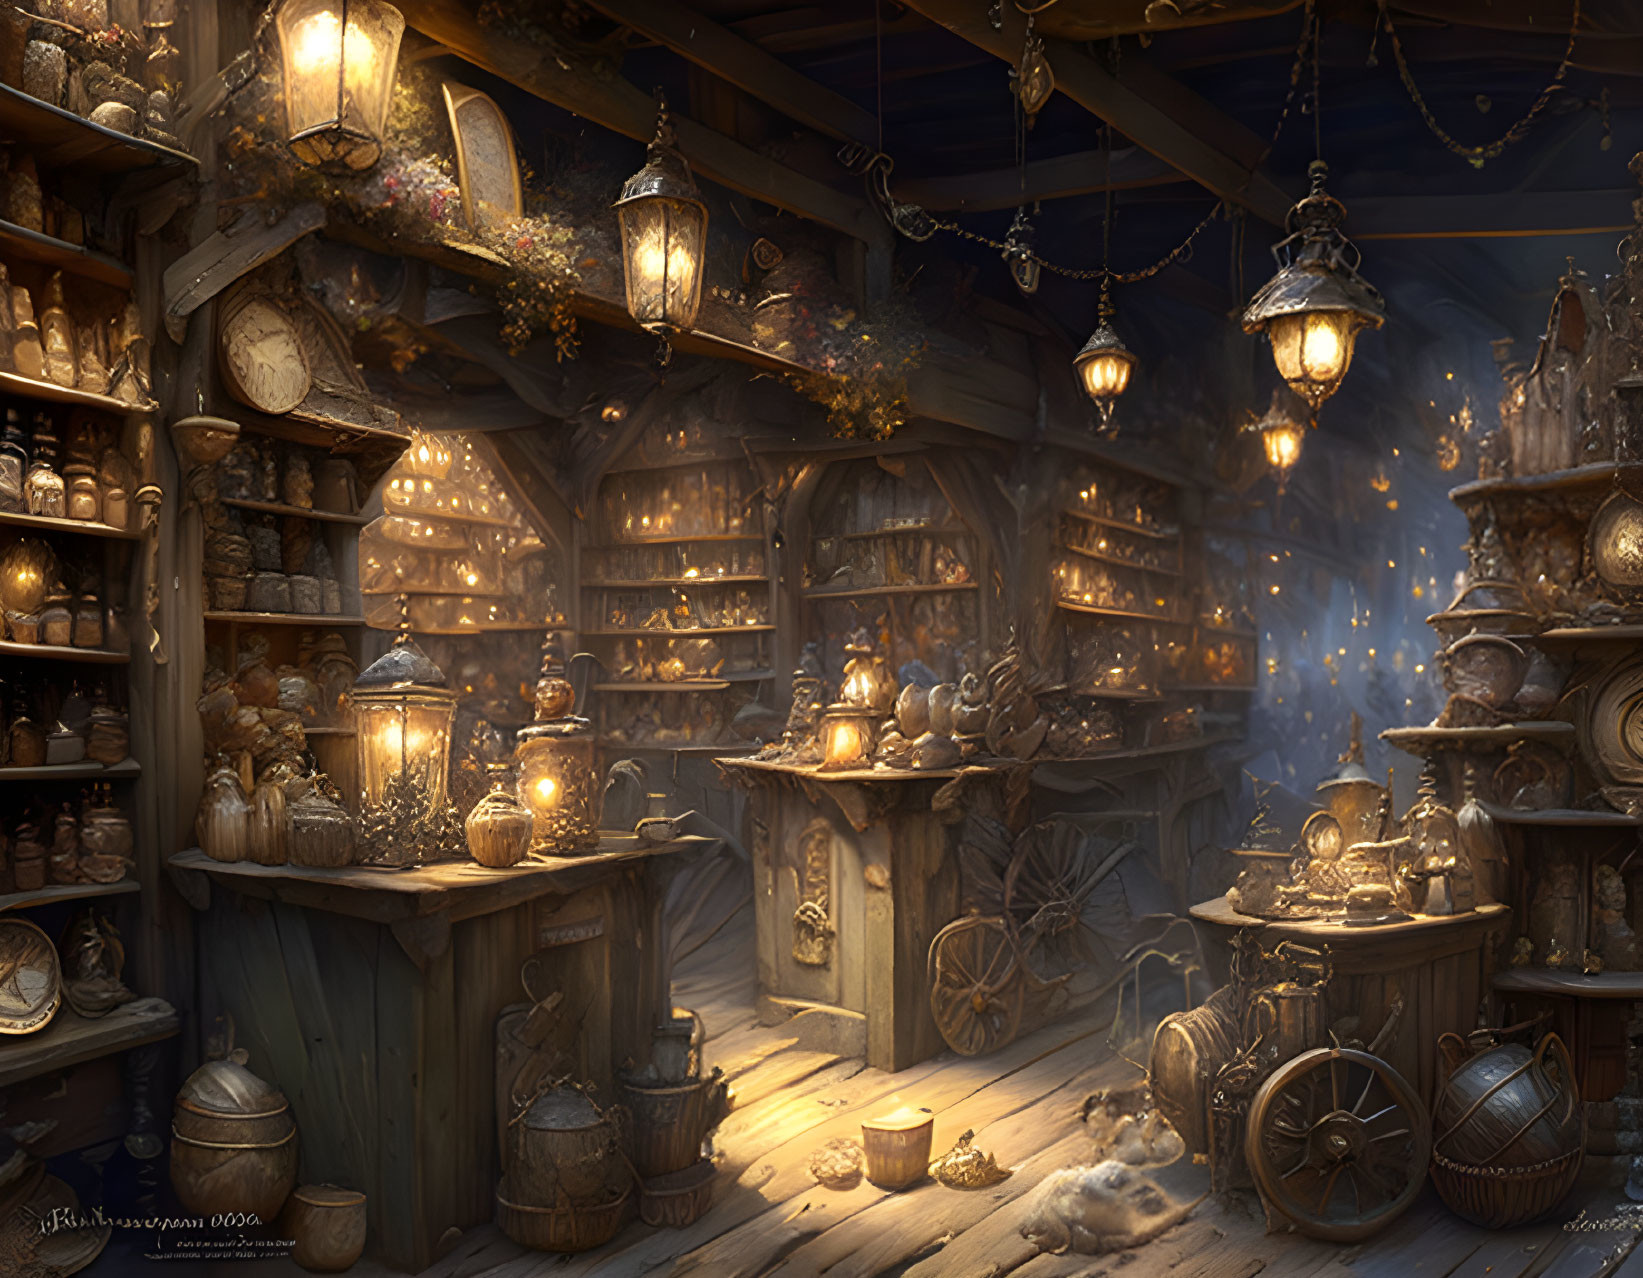  Inside The Old Curiosity Shop